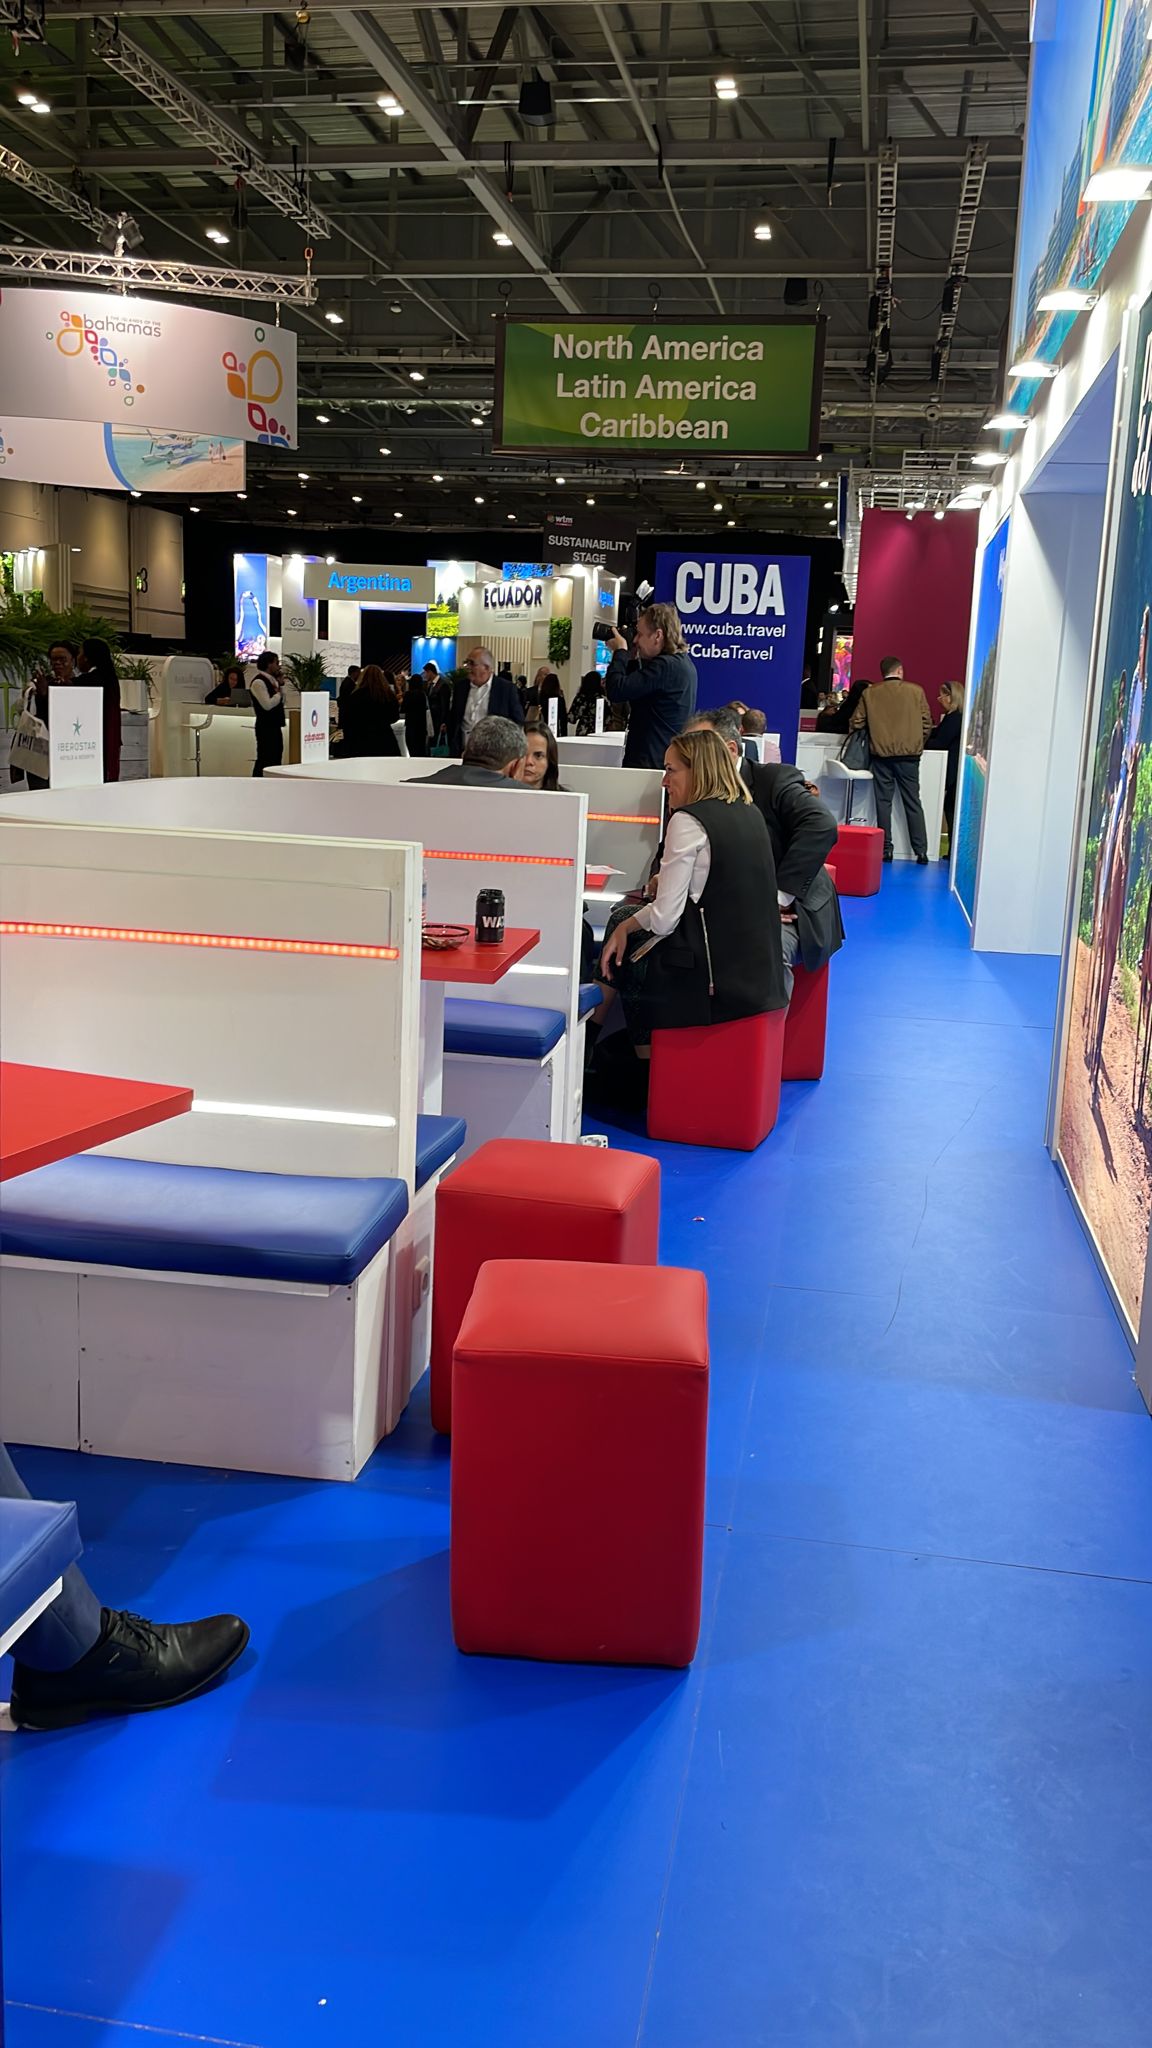 Cuba participa en el World Travel Market London